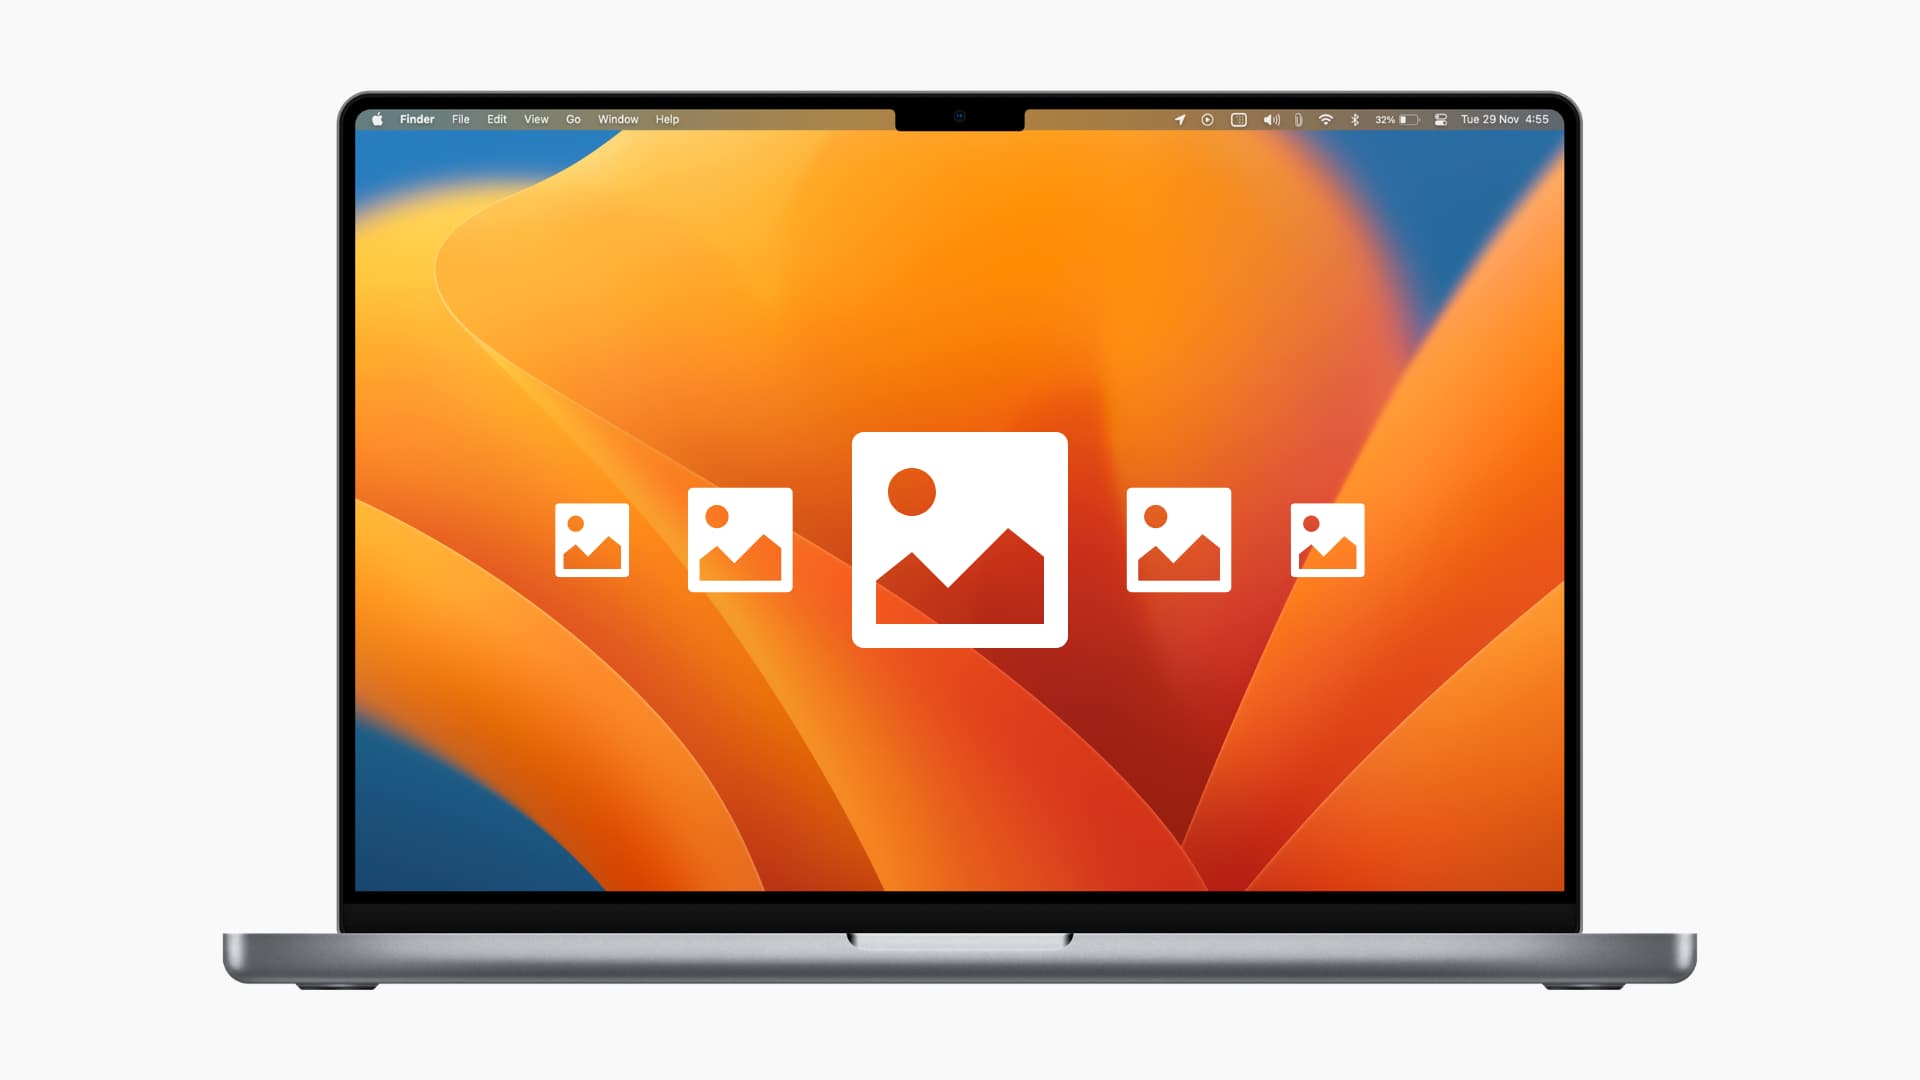 MacBook desktop with the official macOS Ventura wallpaper